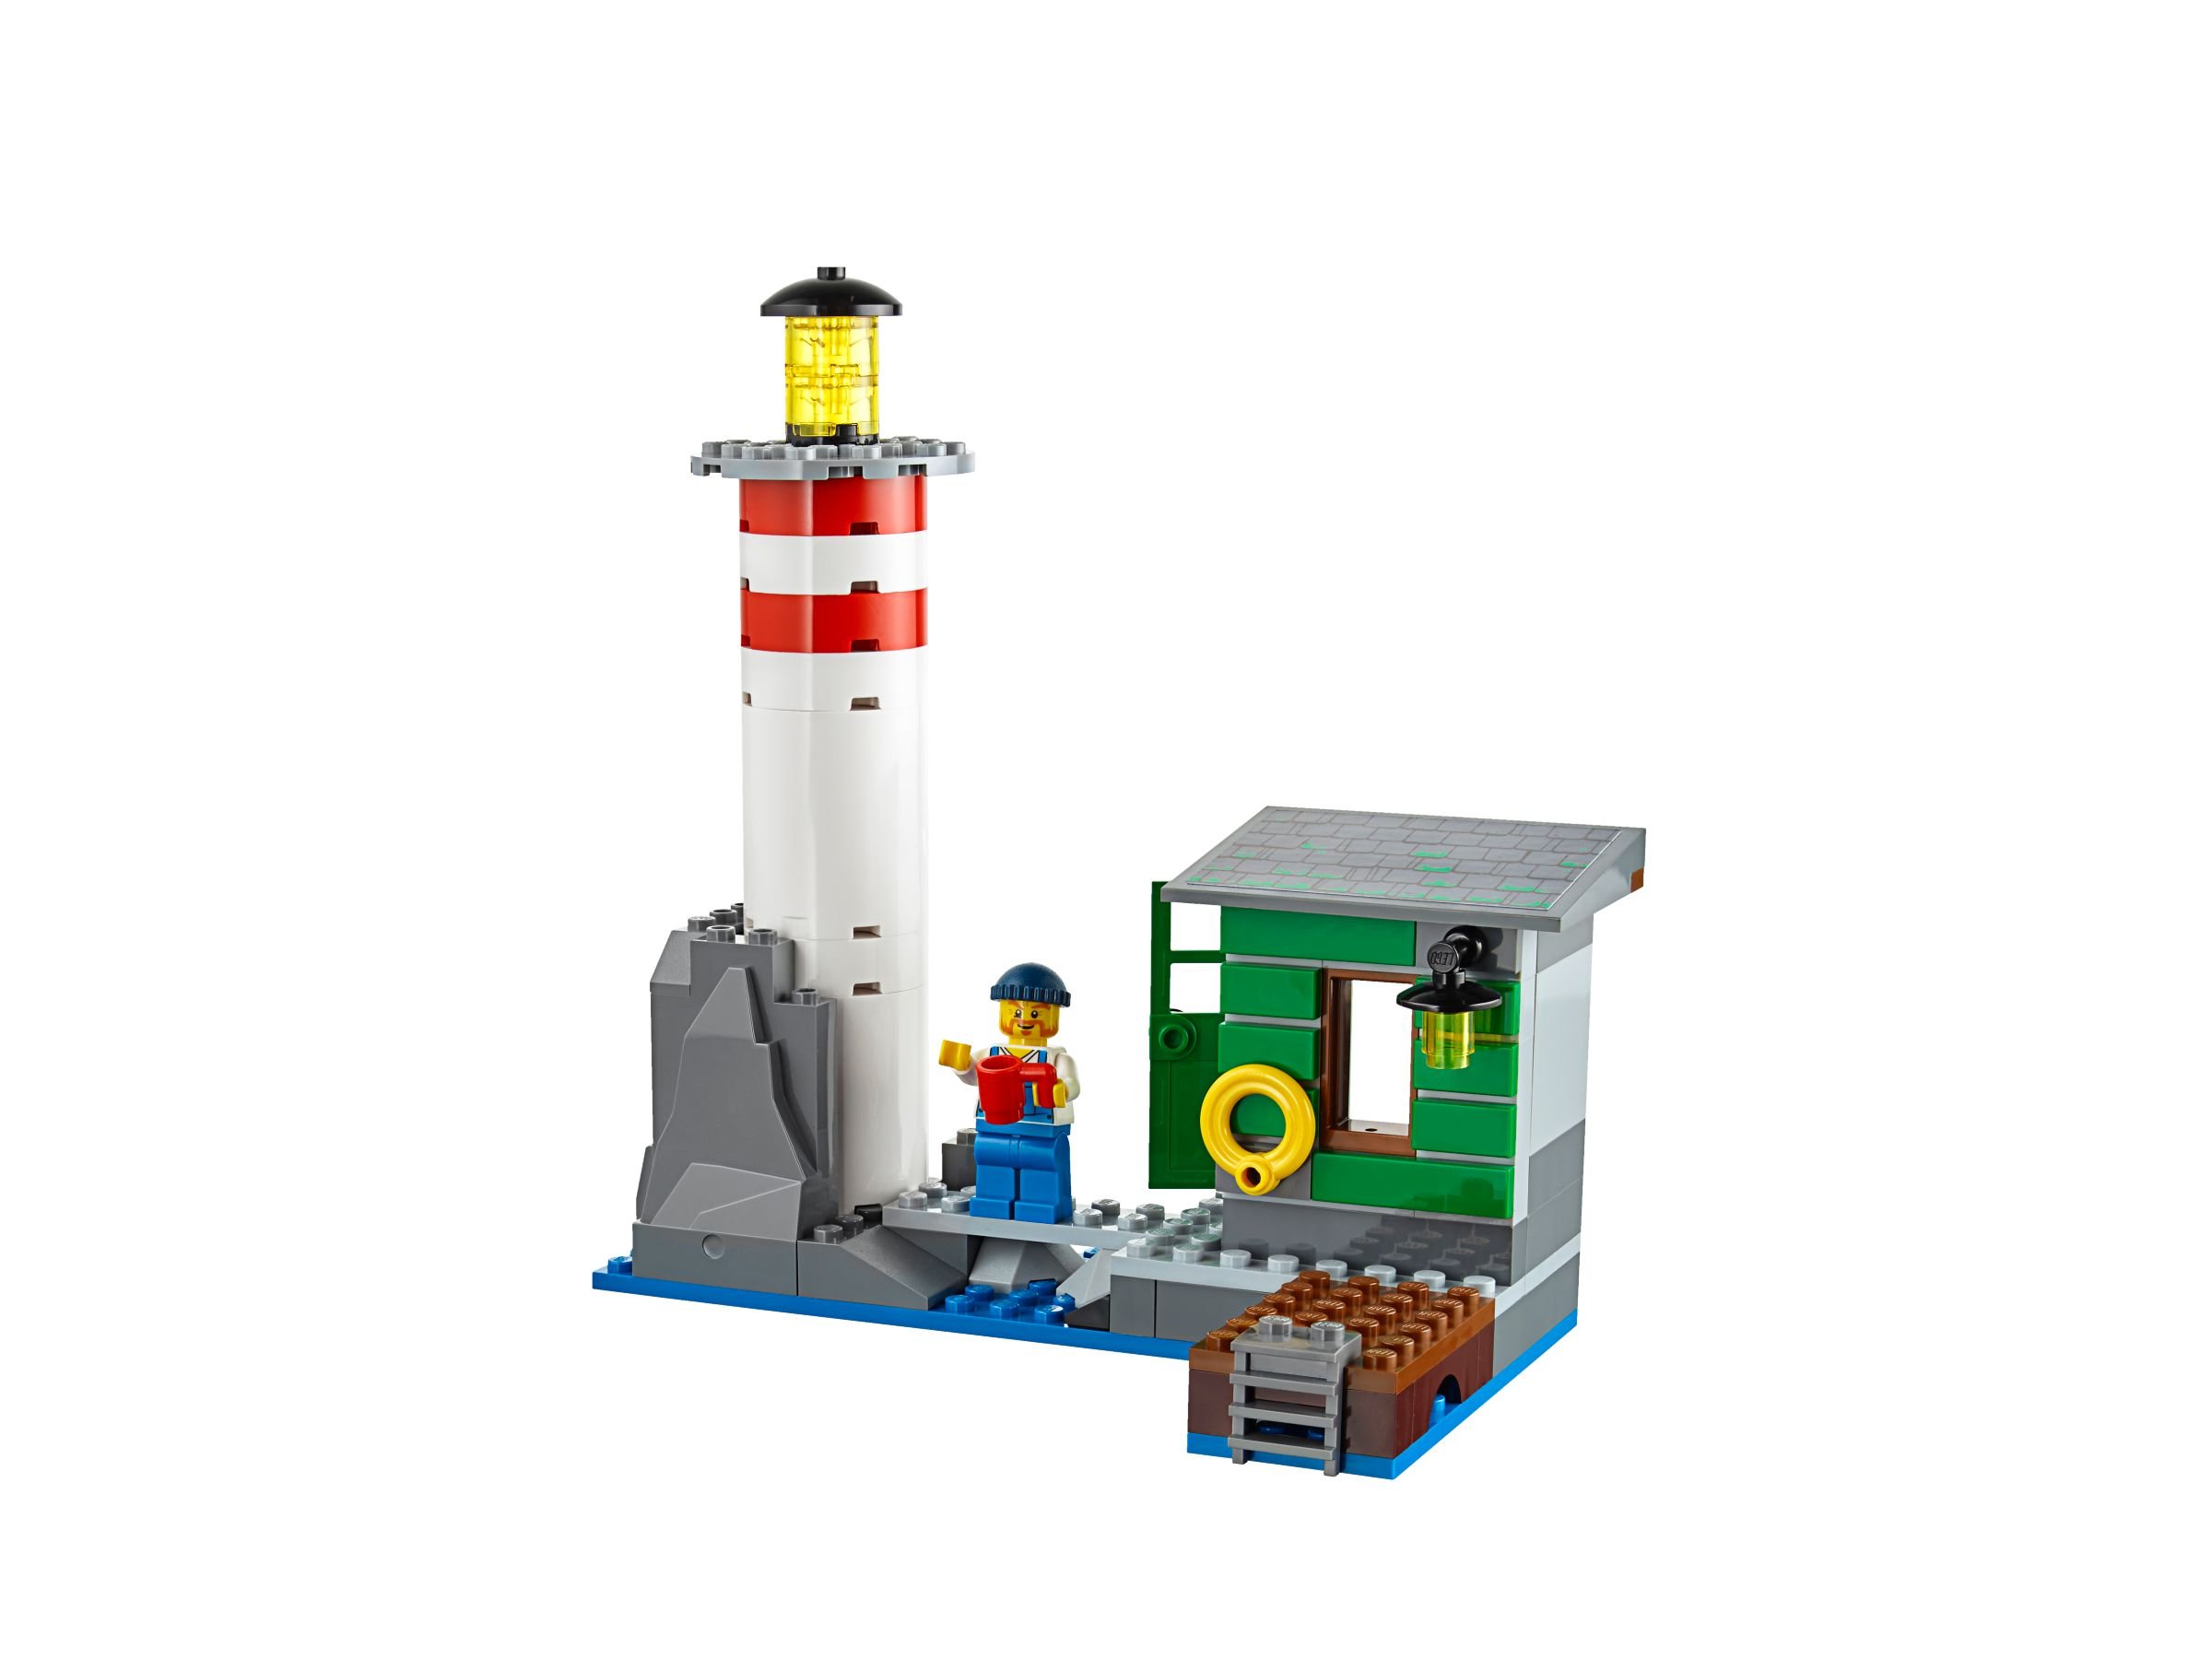 LEGO City 60109 Feuerwehrschiff LEGO_60109_alt10.jpg